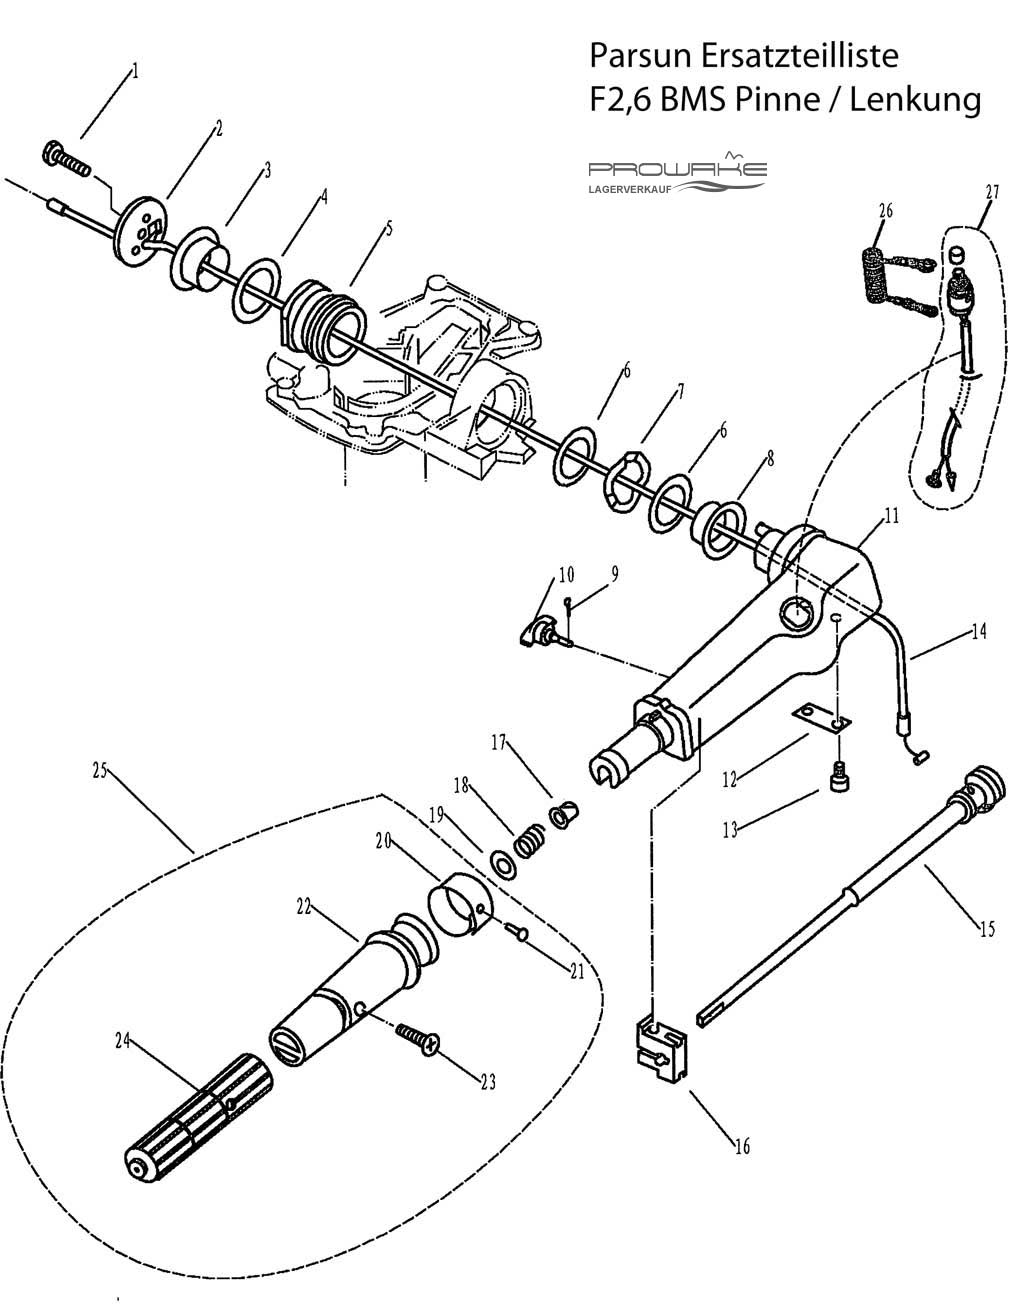 Parsun F2.6  Ersatzteile / Spare Parts: Pinne-Lenkung